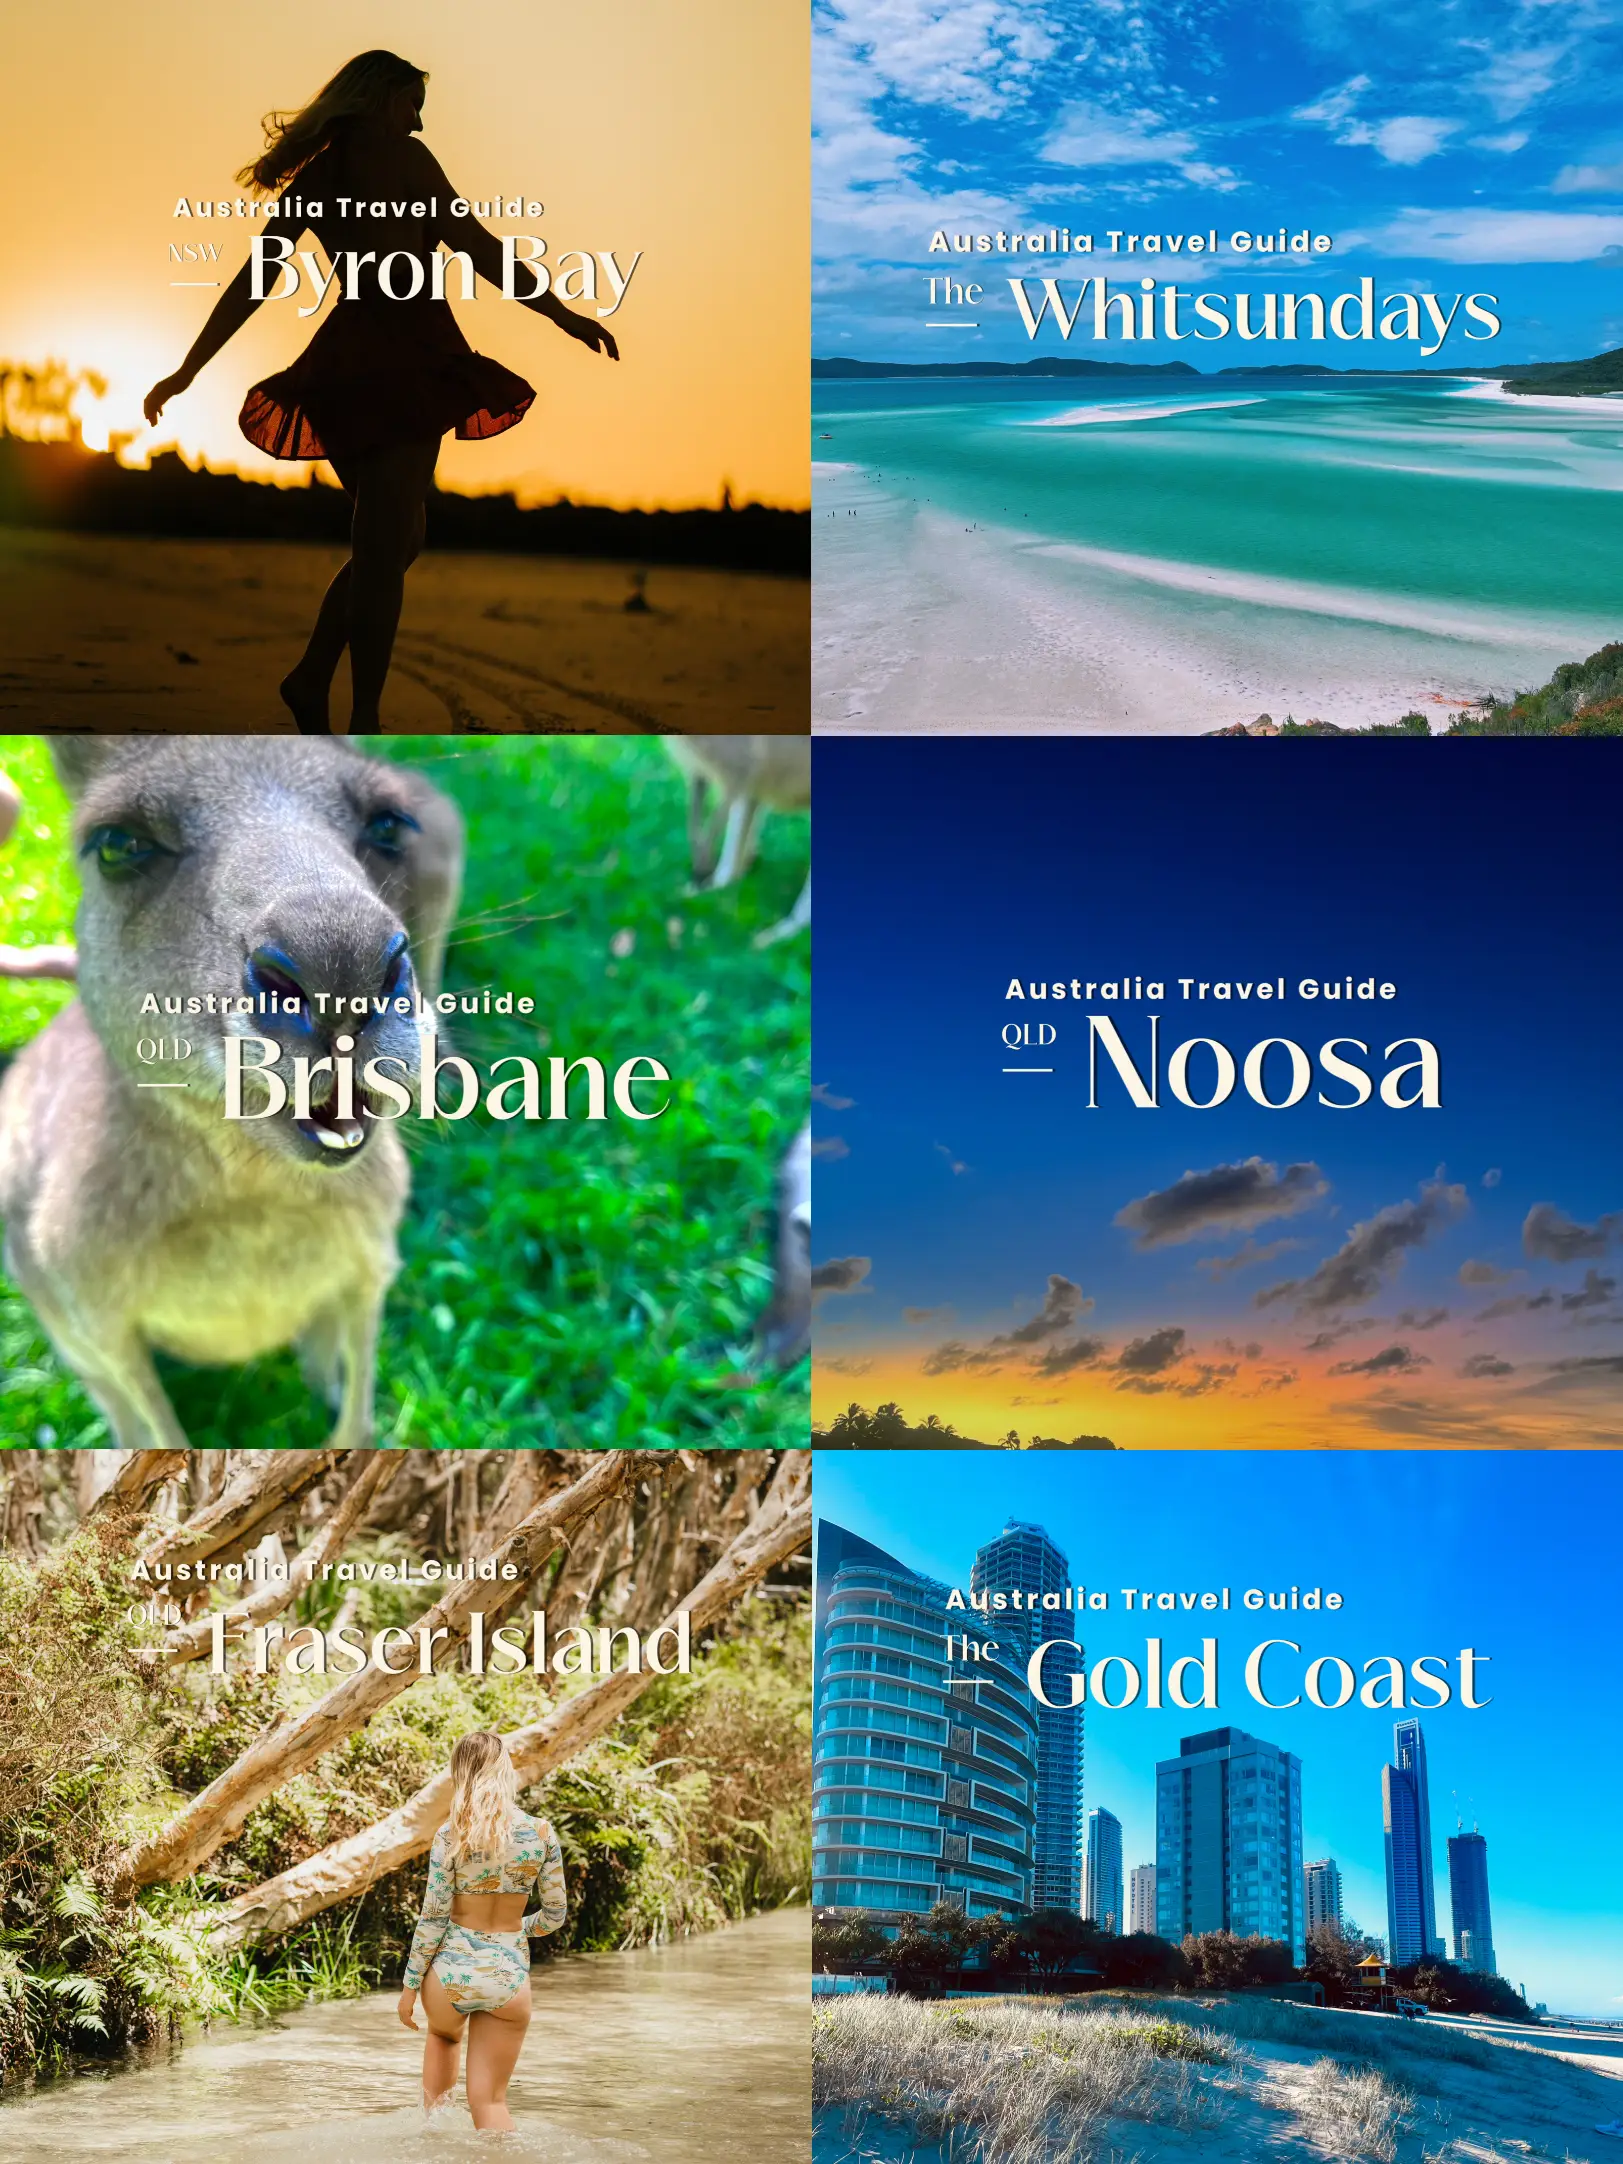 Guide to Byron Bay, NSW - Tourism Australia